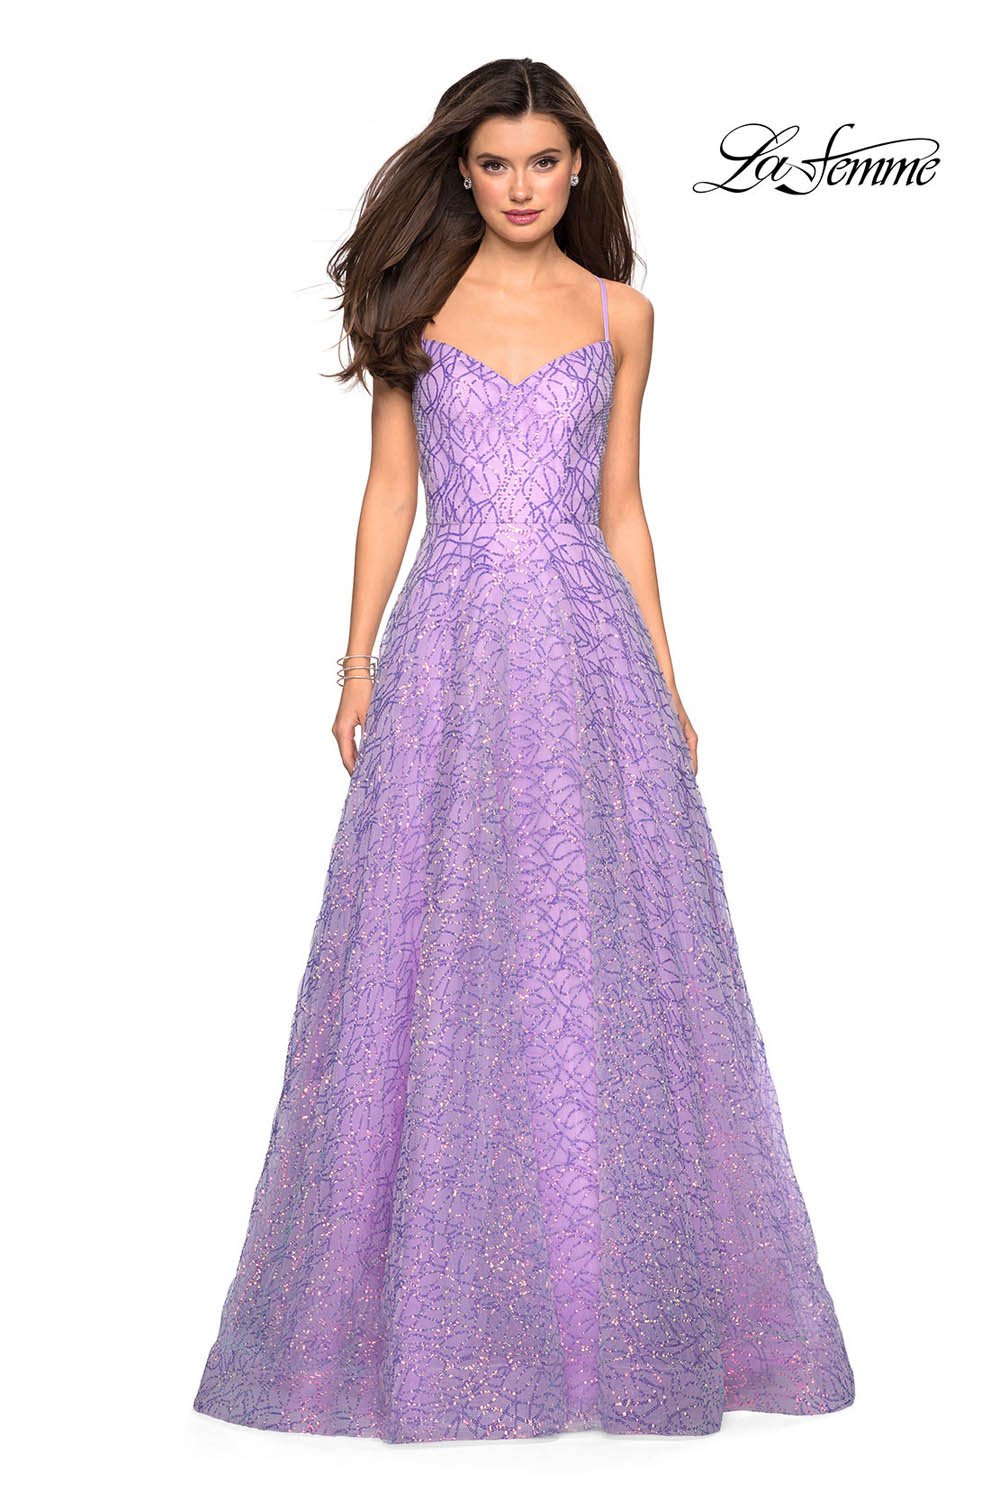 La Femme 27541 dress images in these colors: Blush, Lavender.